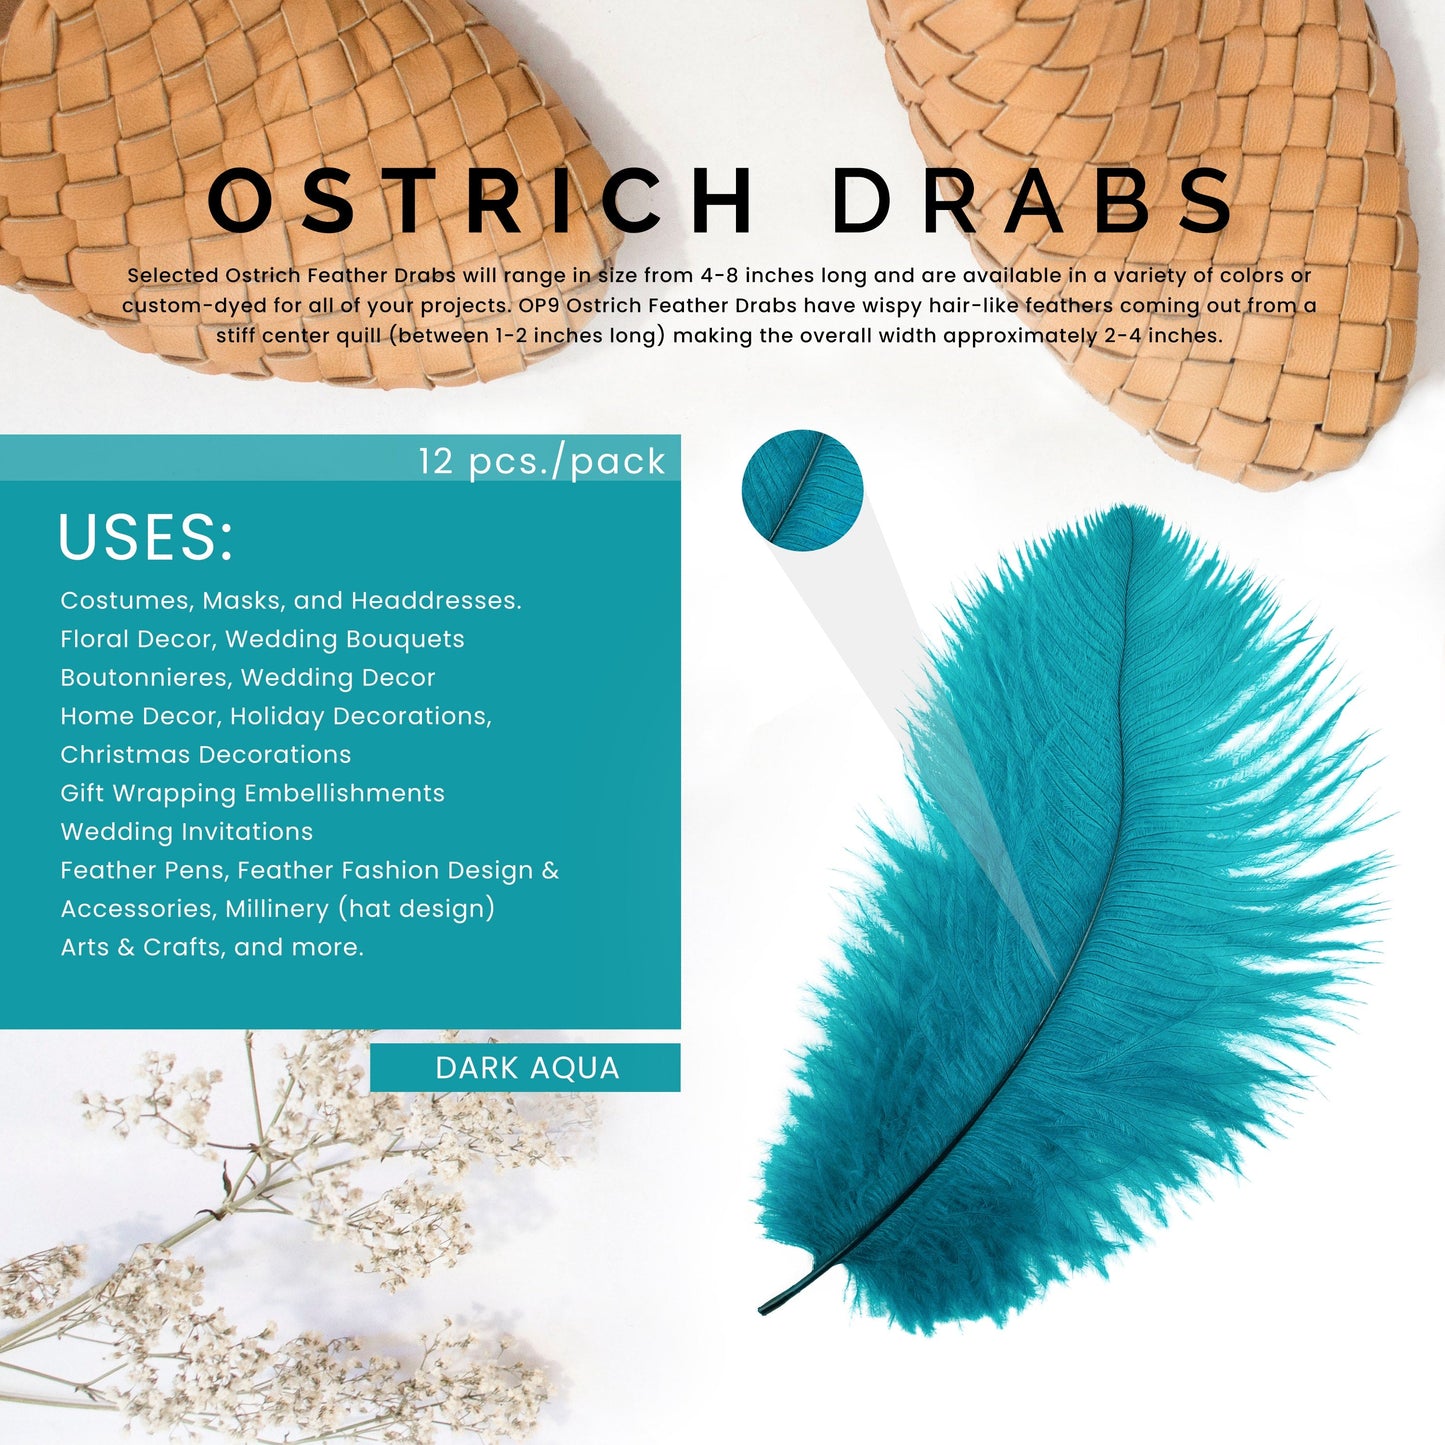 Ostrich Feathers 4-8" Drabs - Dark Aqua